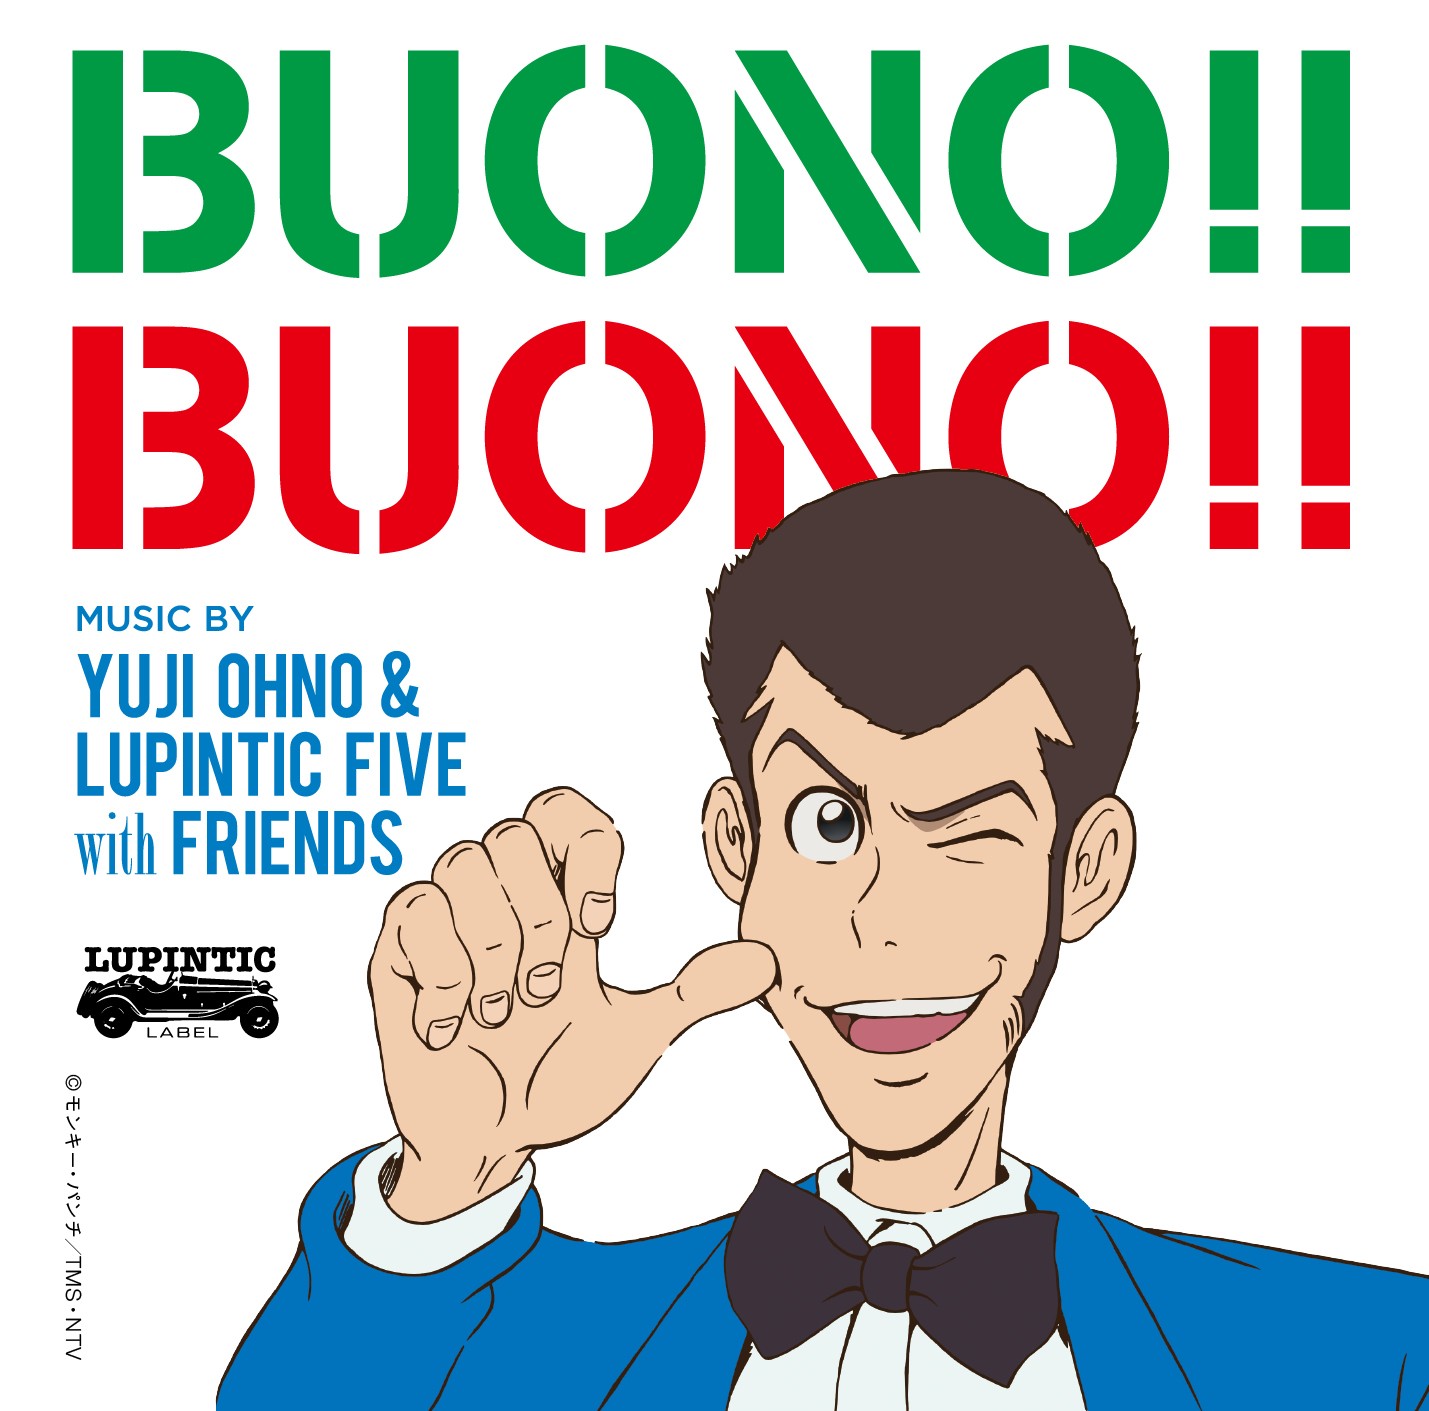 Yuji Ohno & Lupintic Five with Friends - BUONO!! BUONO!! [Mora FLAC 24bit/48kHz]